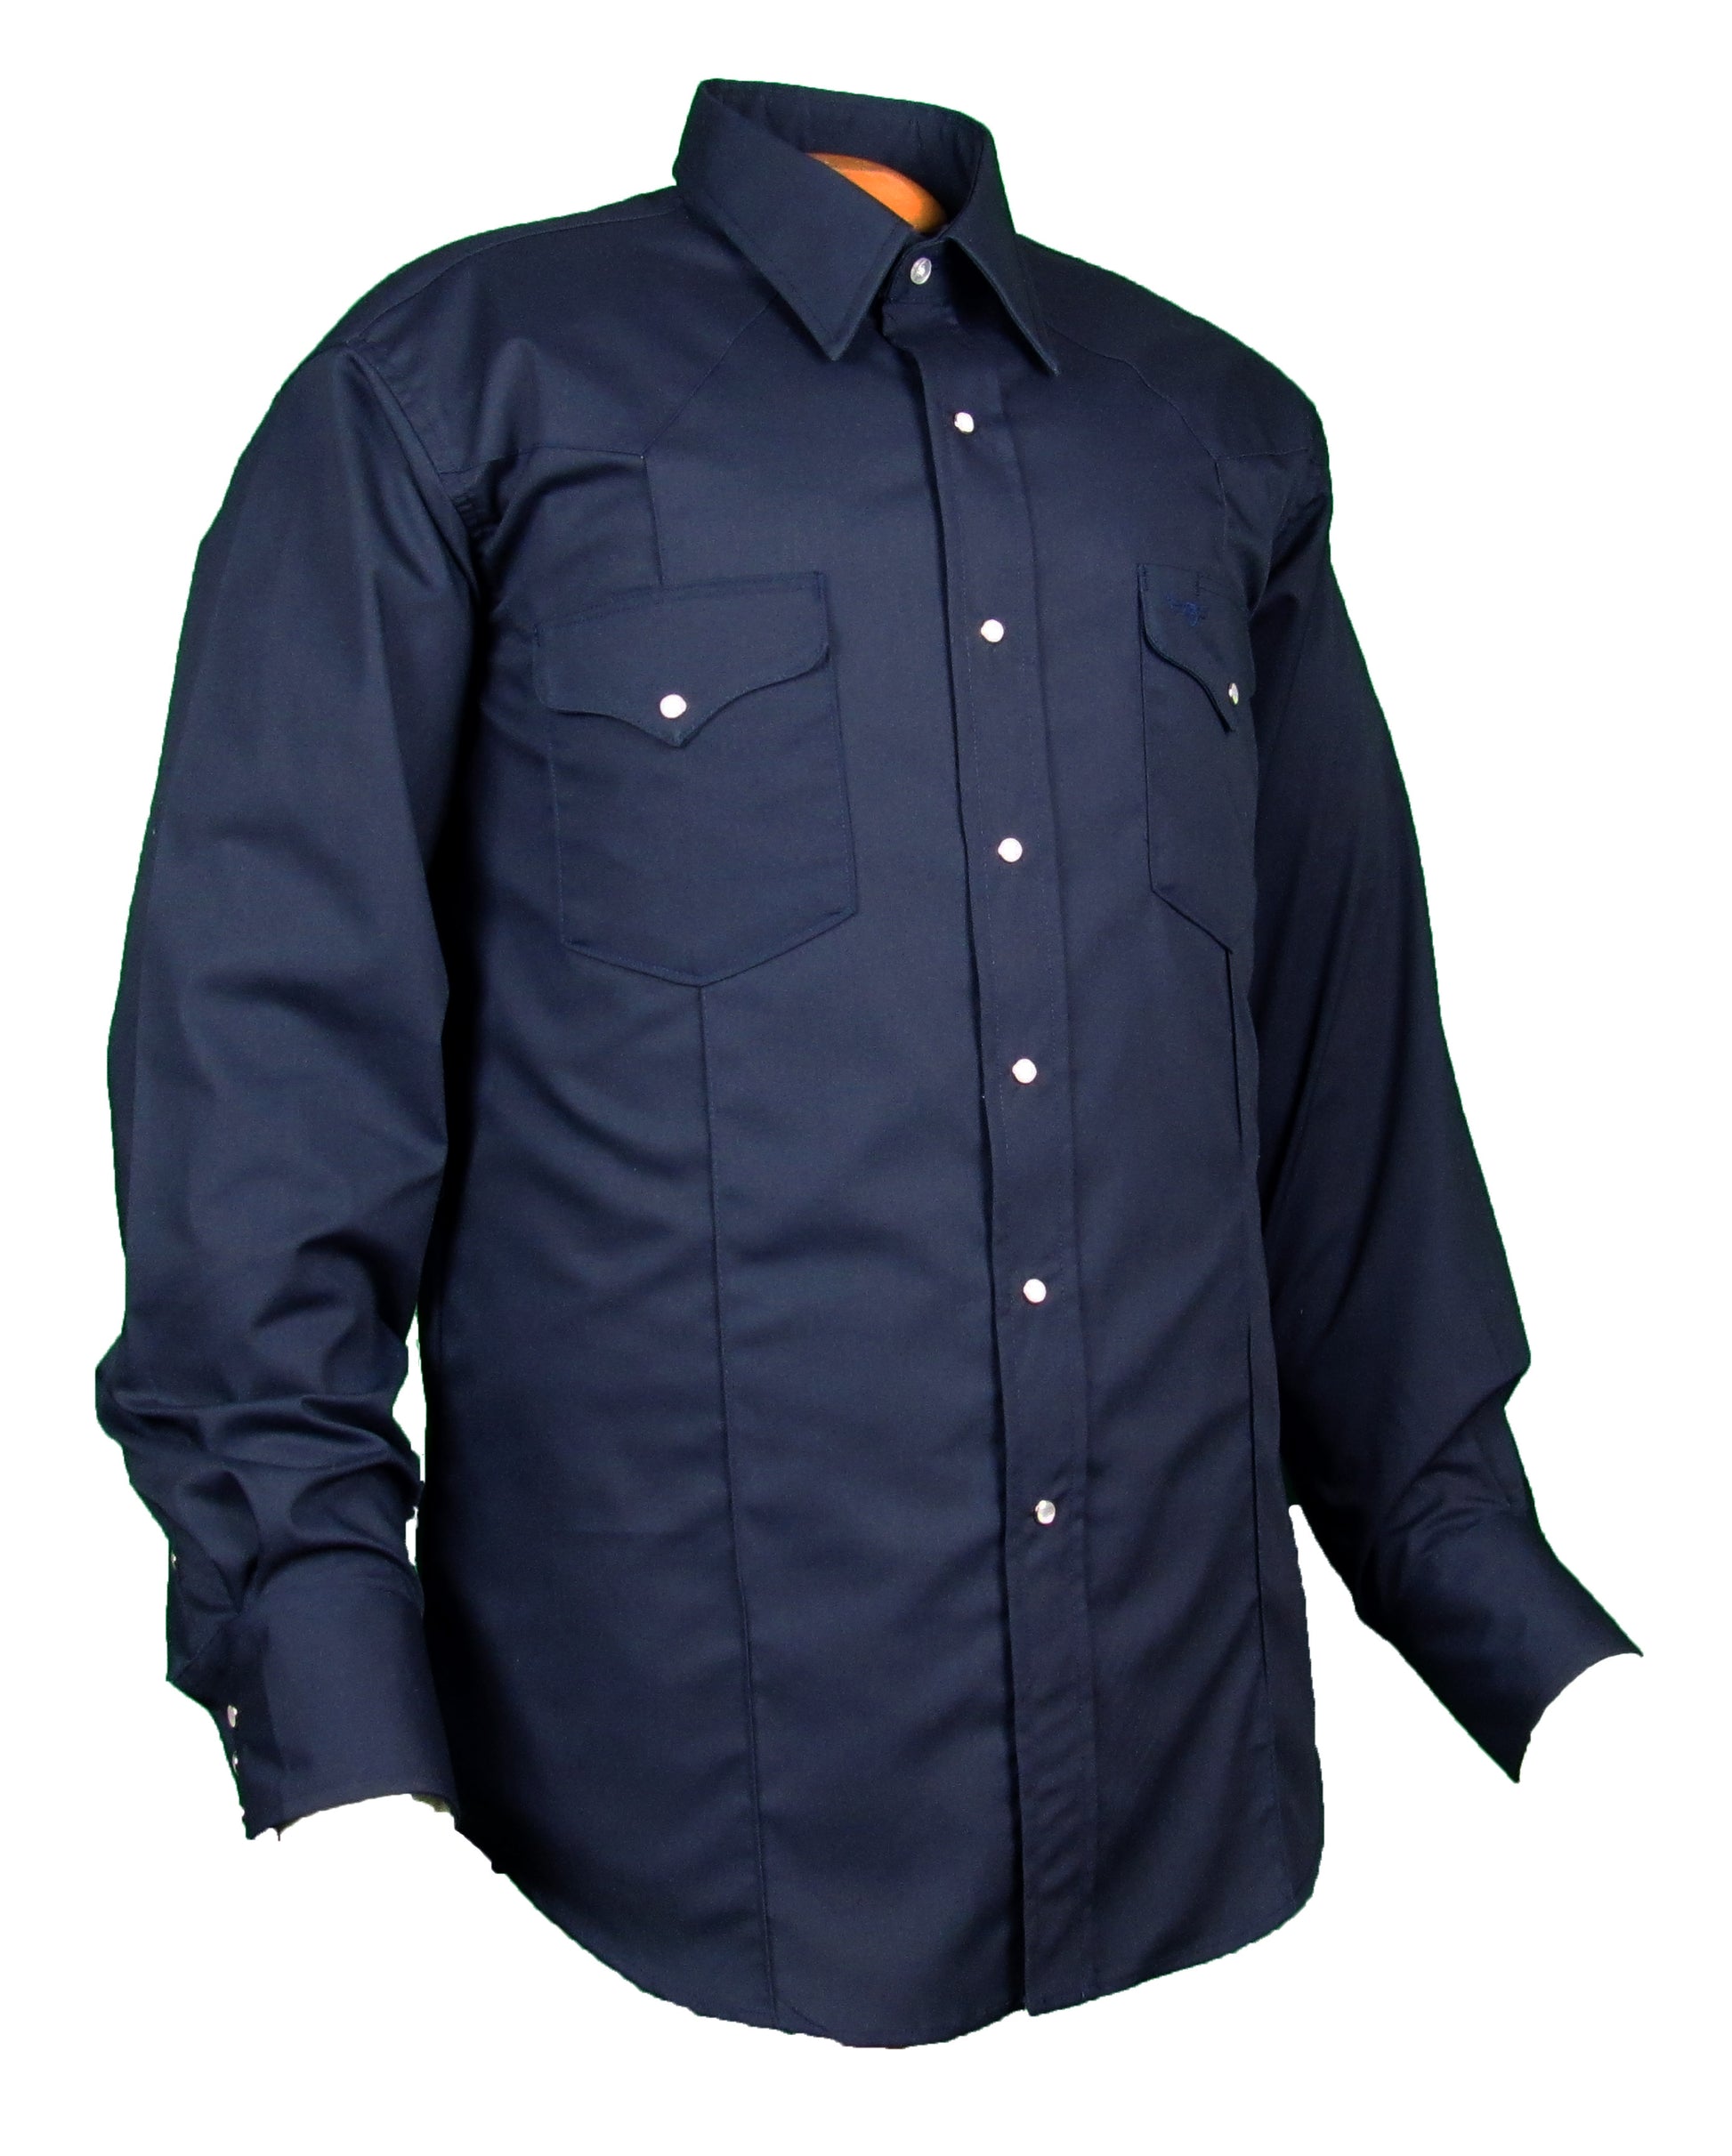 Mens Blue shirt - Buy Blue shirt in USA, Blue Collar shirt, Blue